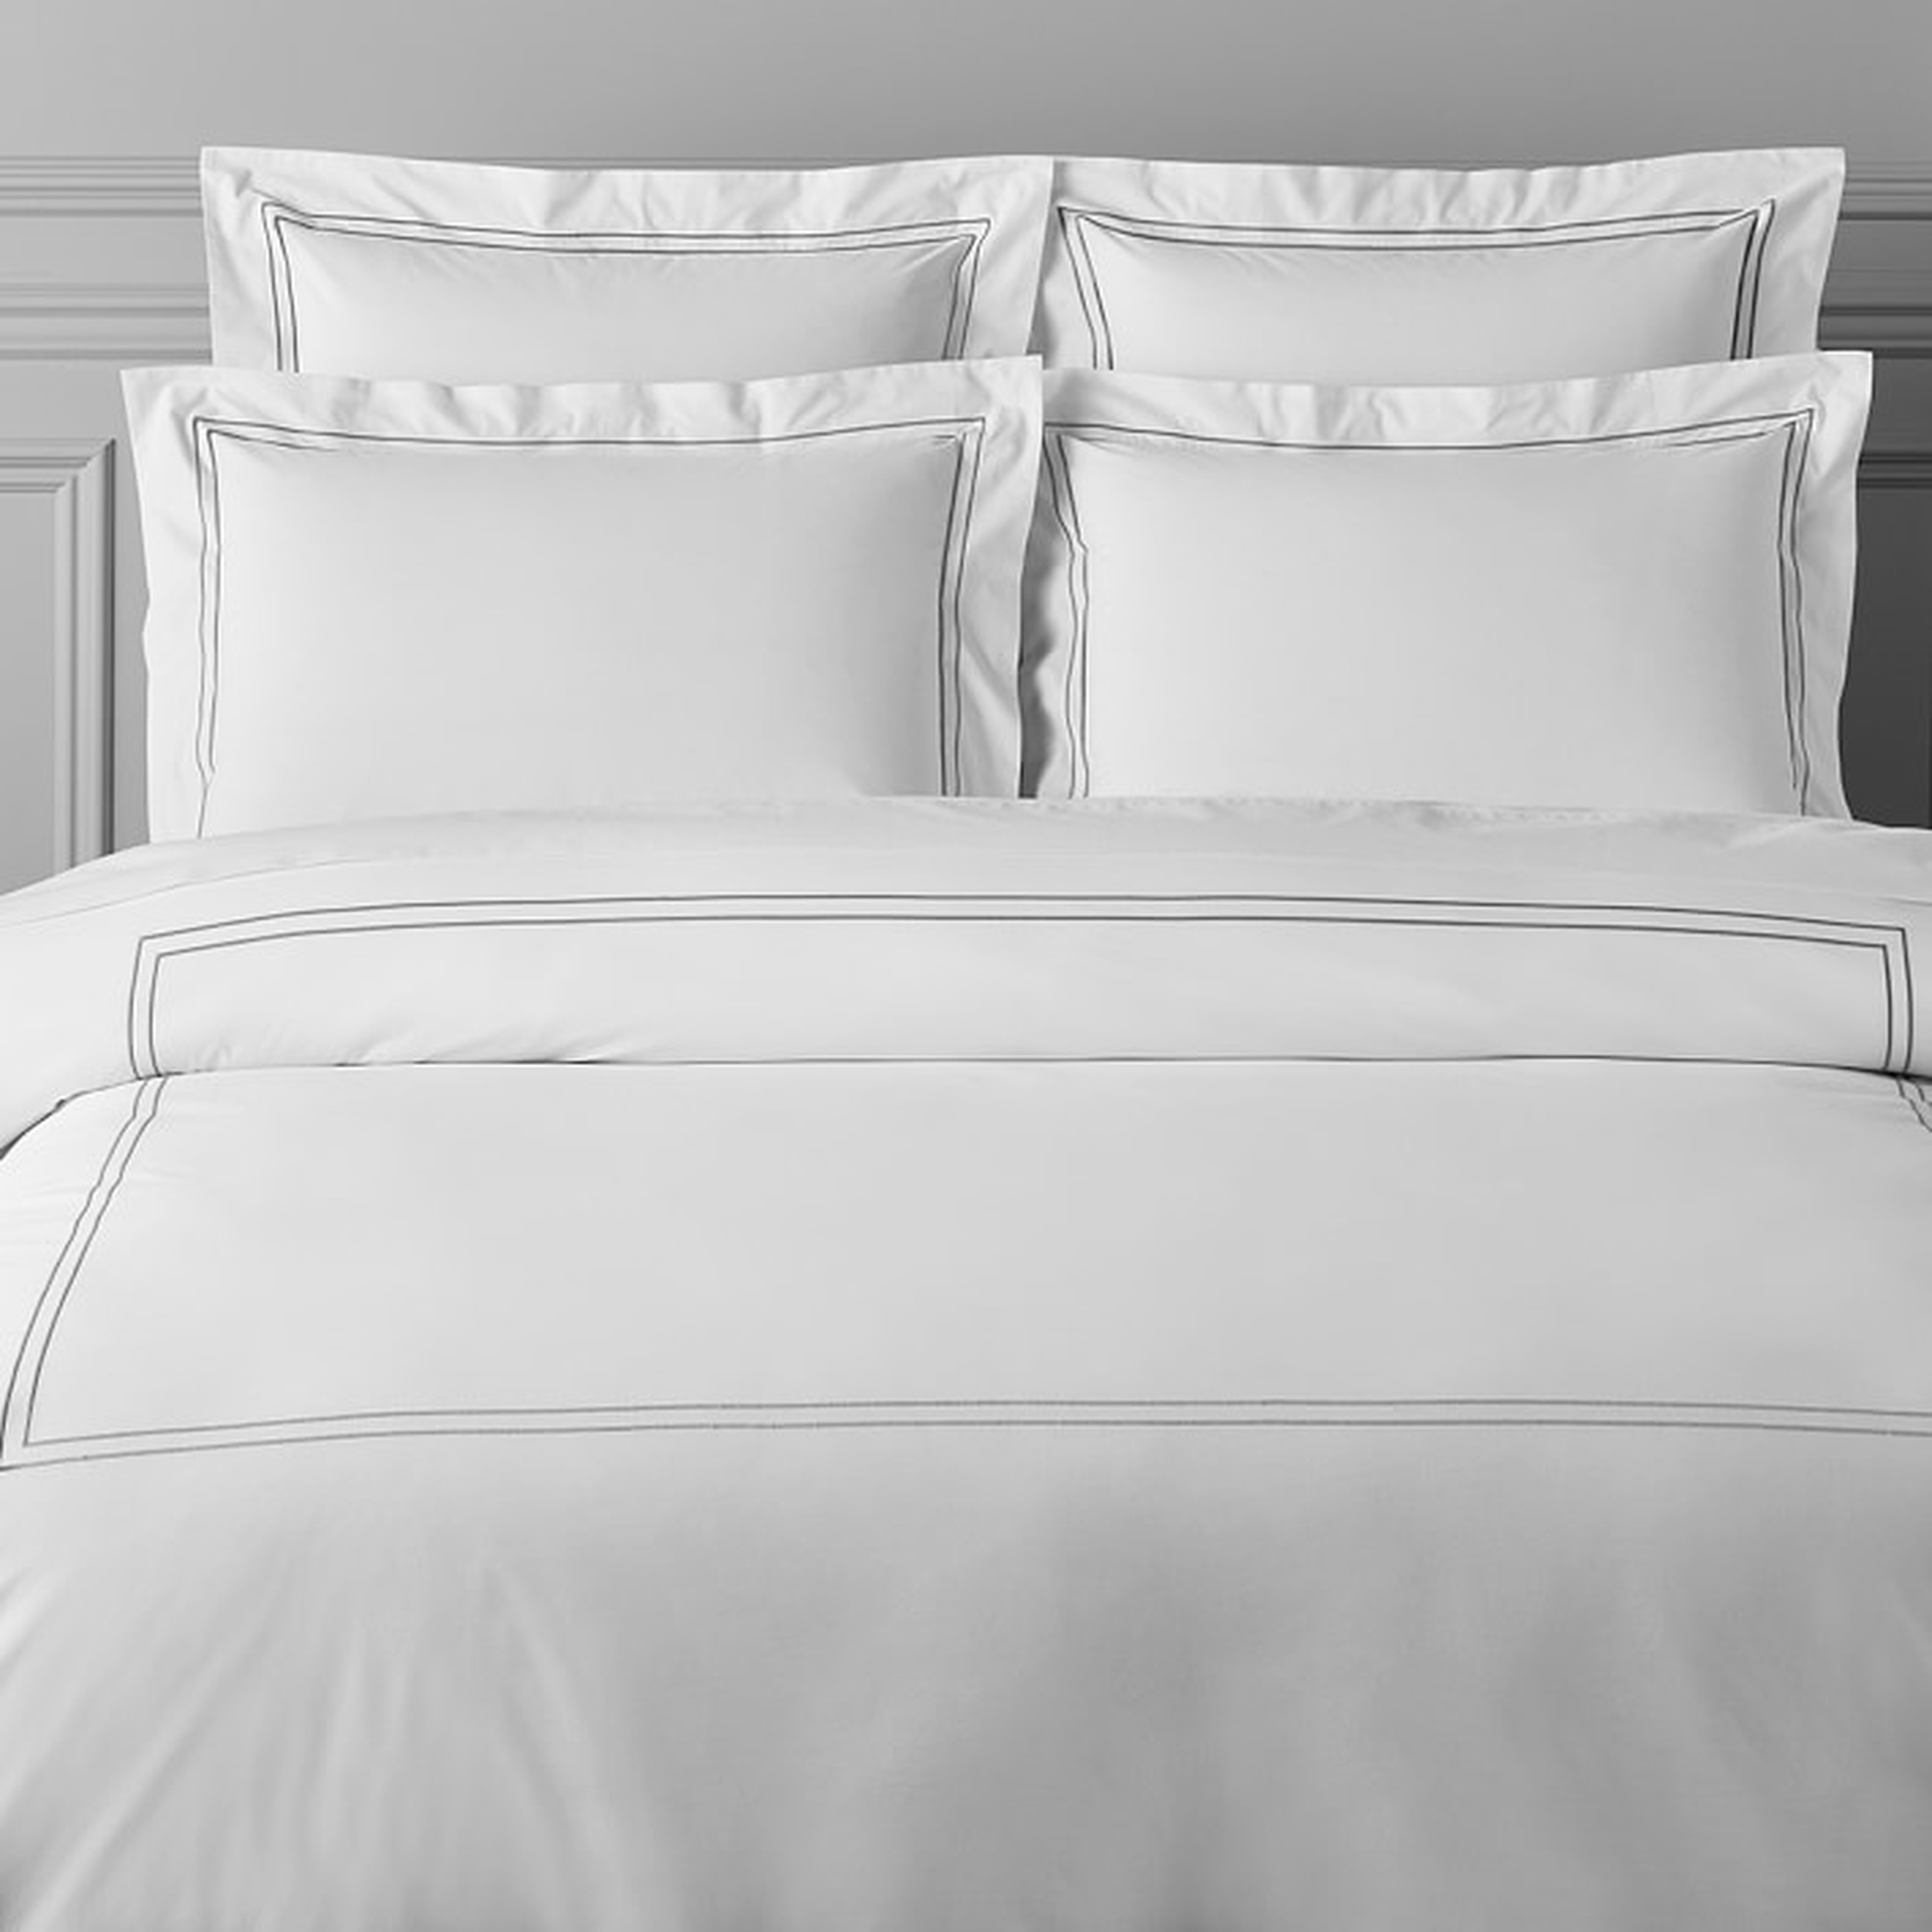 Italian Hotel Embroidered Bedding - Duvet cover, Full/Queen - Williams Sonoma Home